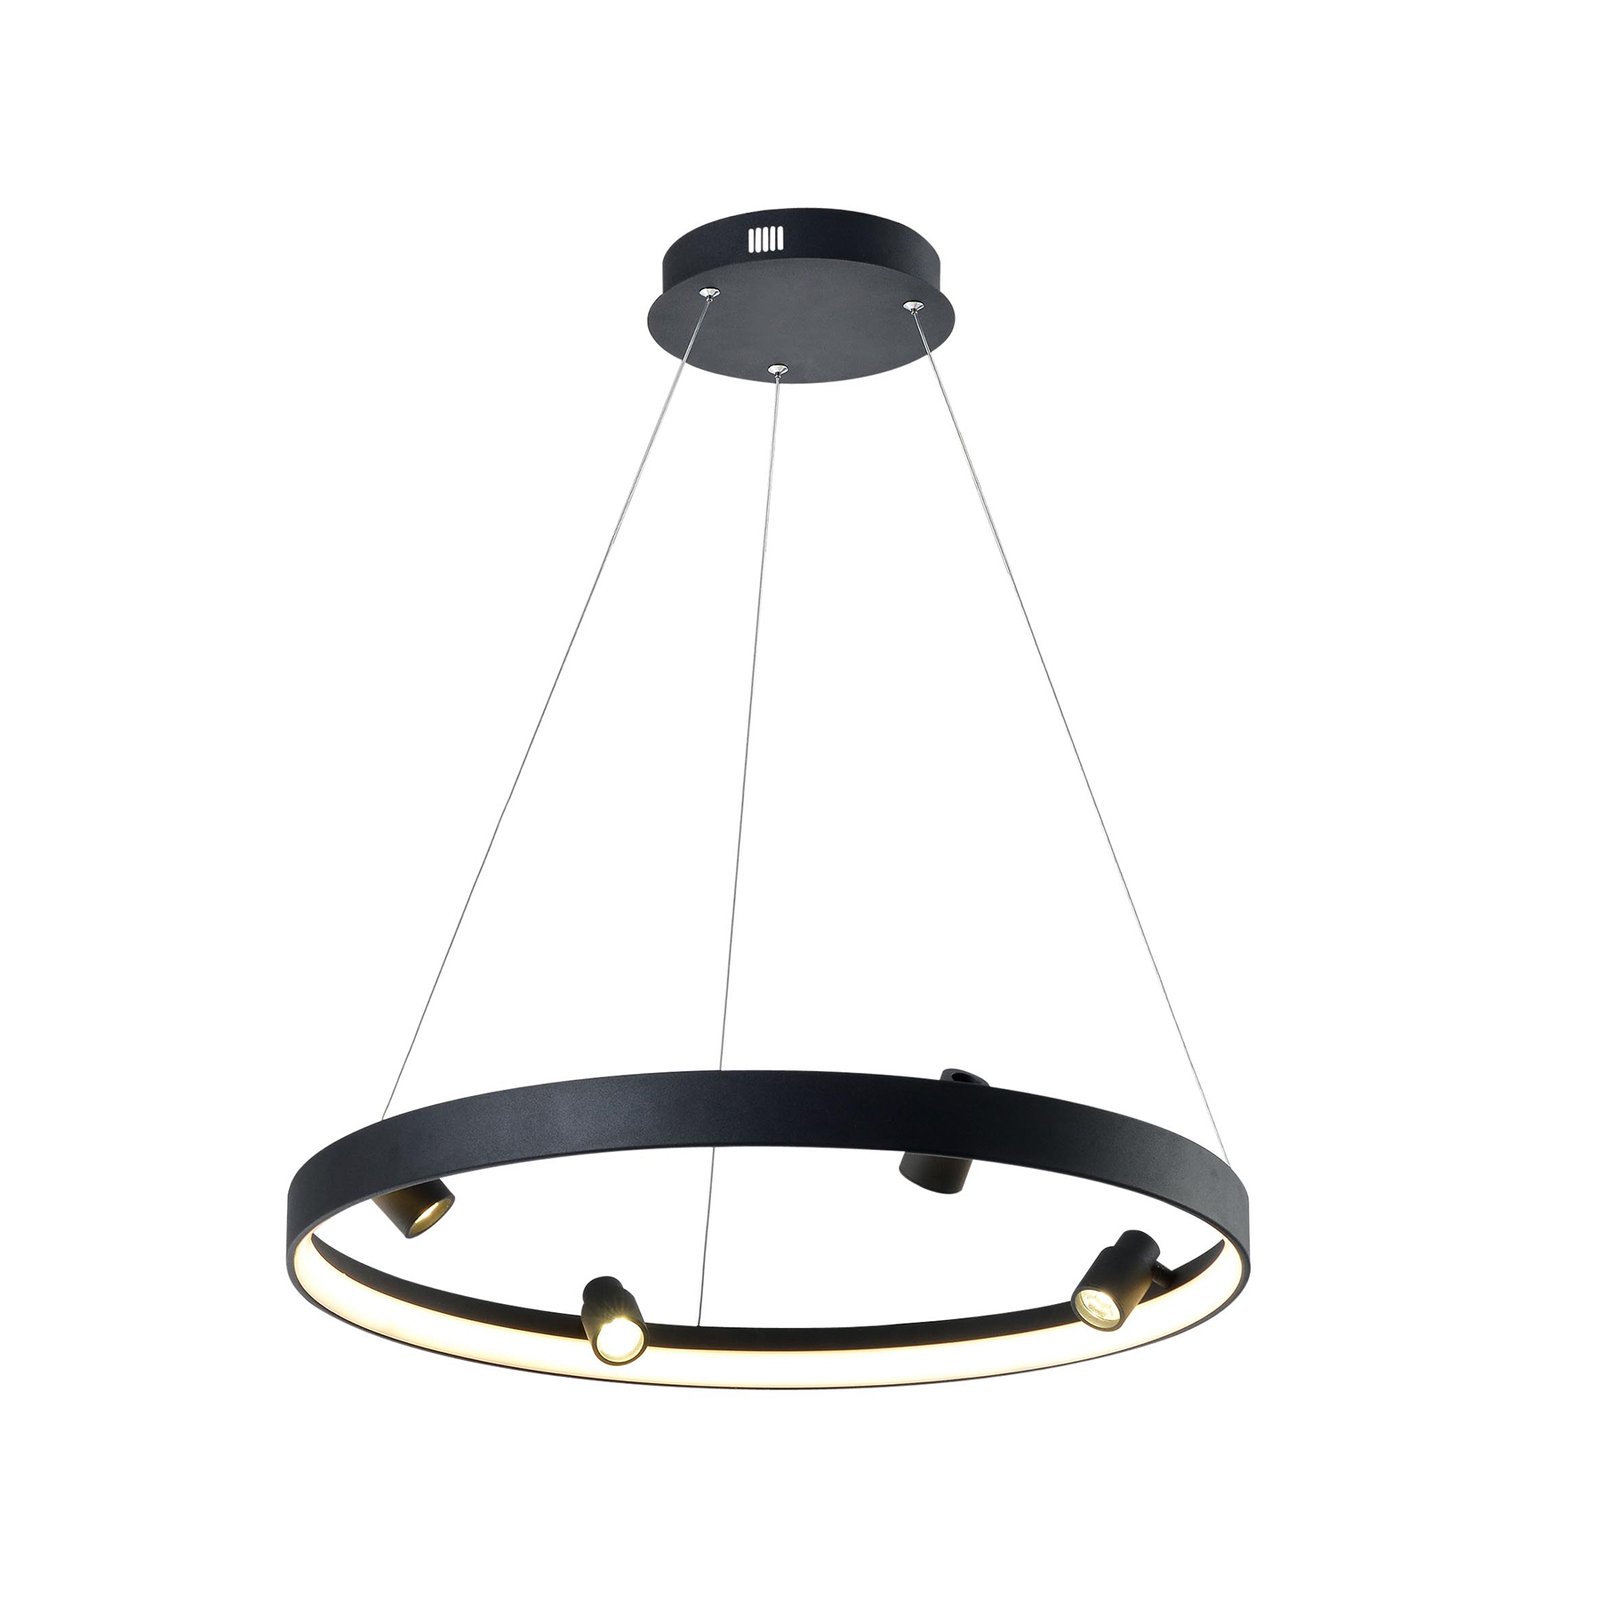 LED pendant light Denis, circular with four spots